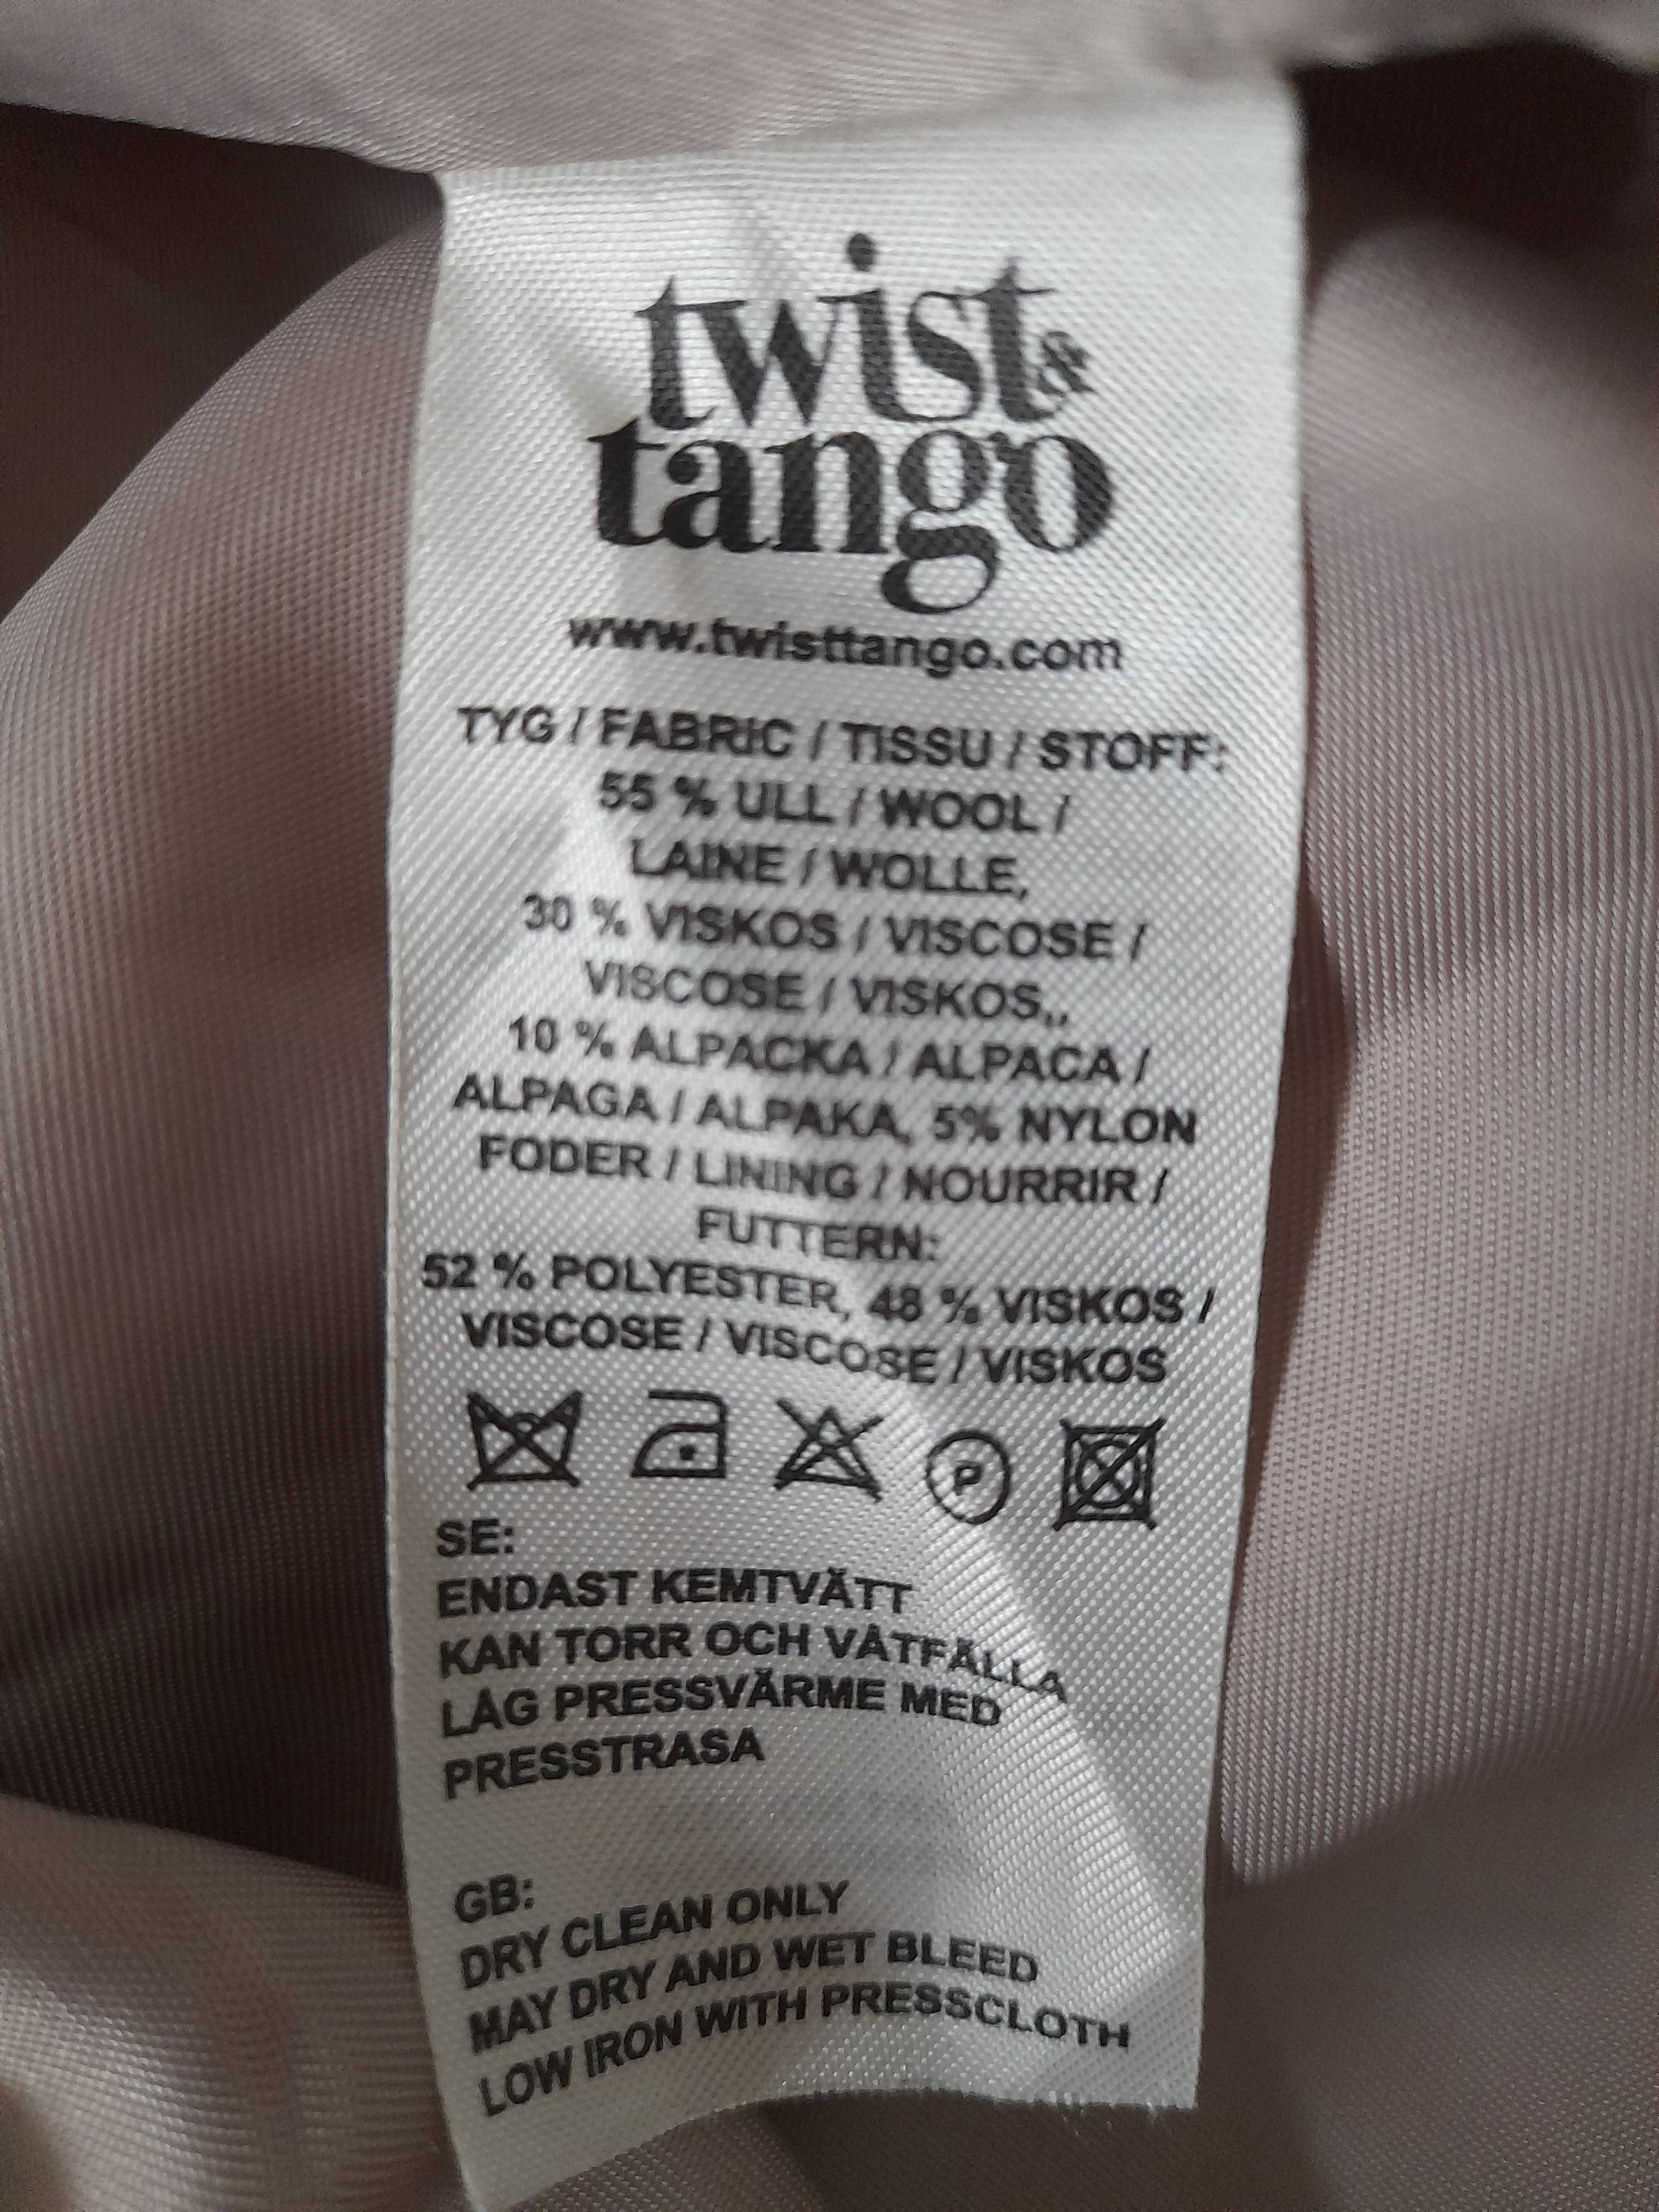 Palton twist&tago, lana/alpaca ,nr.40, 70 lei